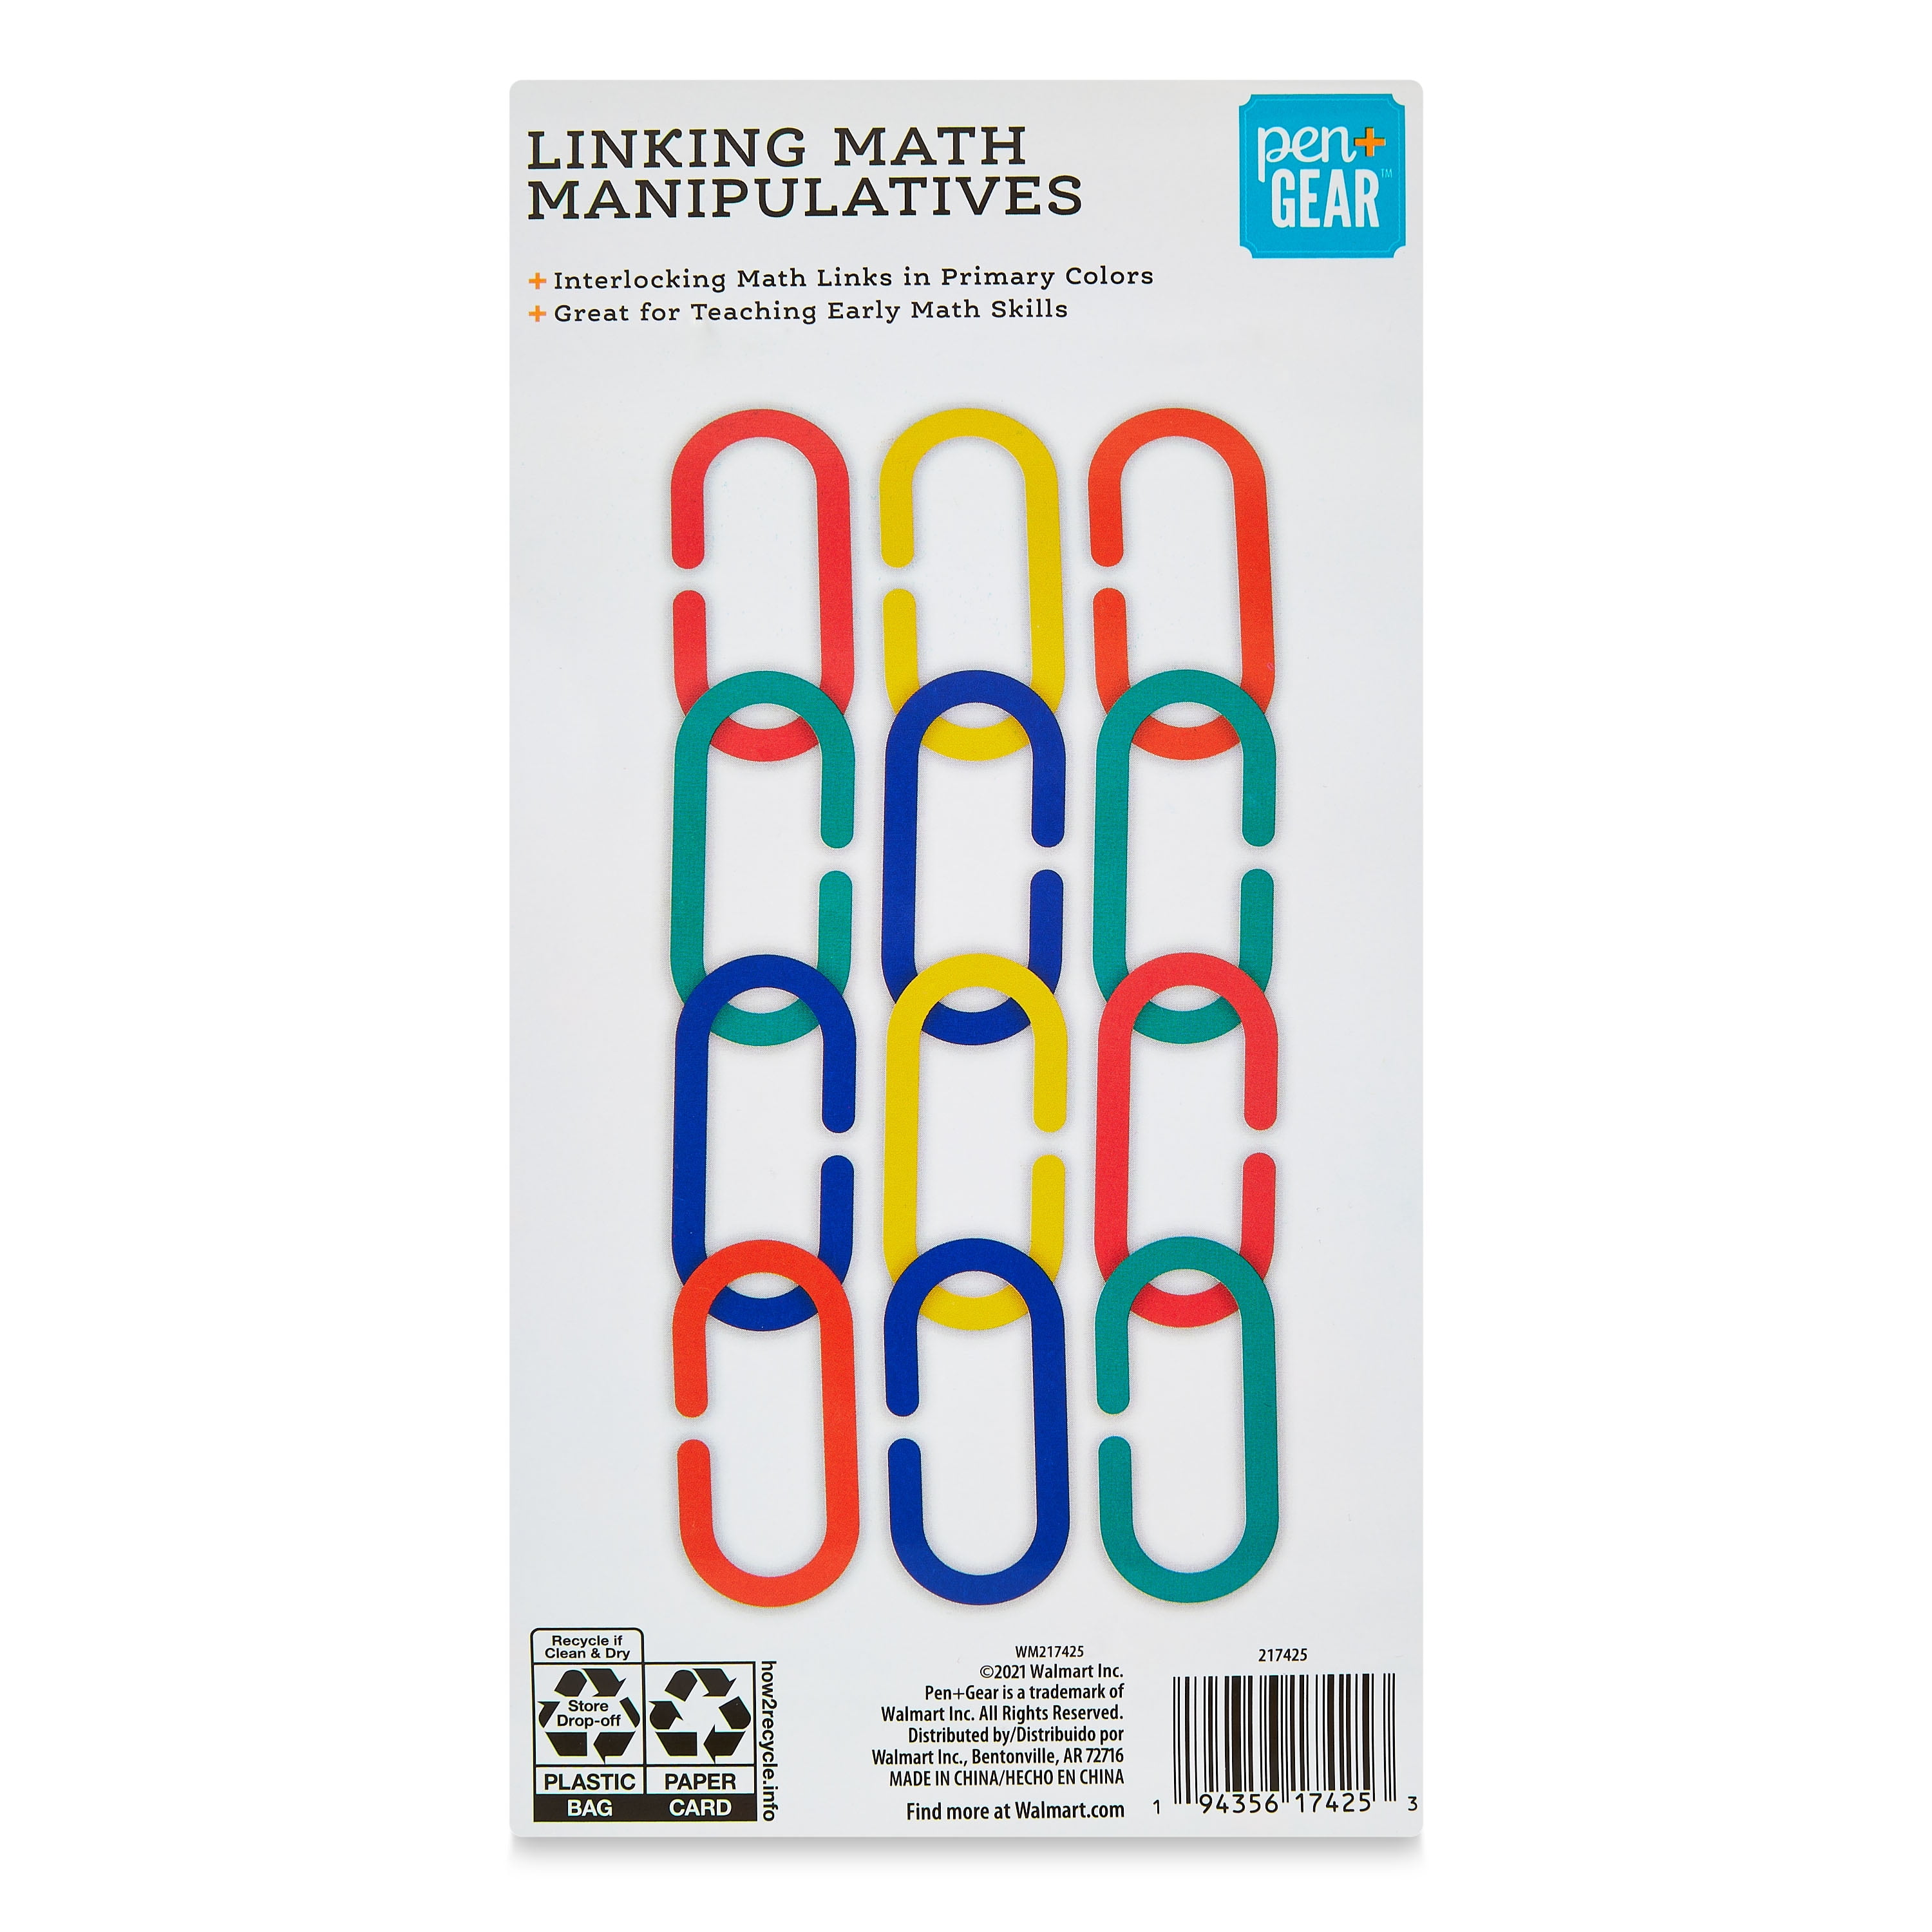 Educational - plastic multi color Links chains @300 pc. manipulative, math